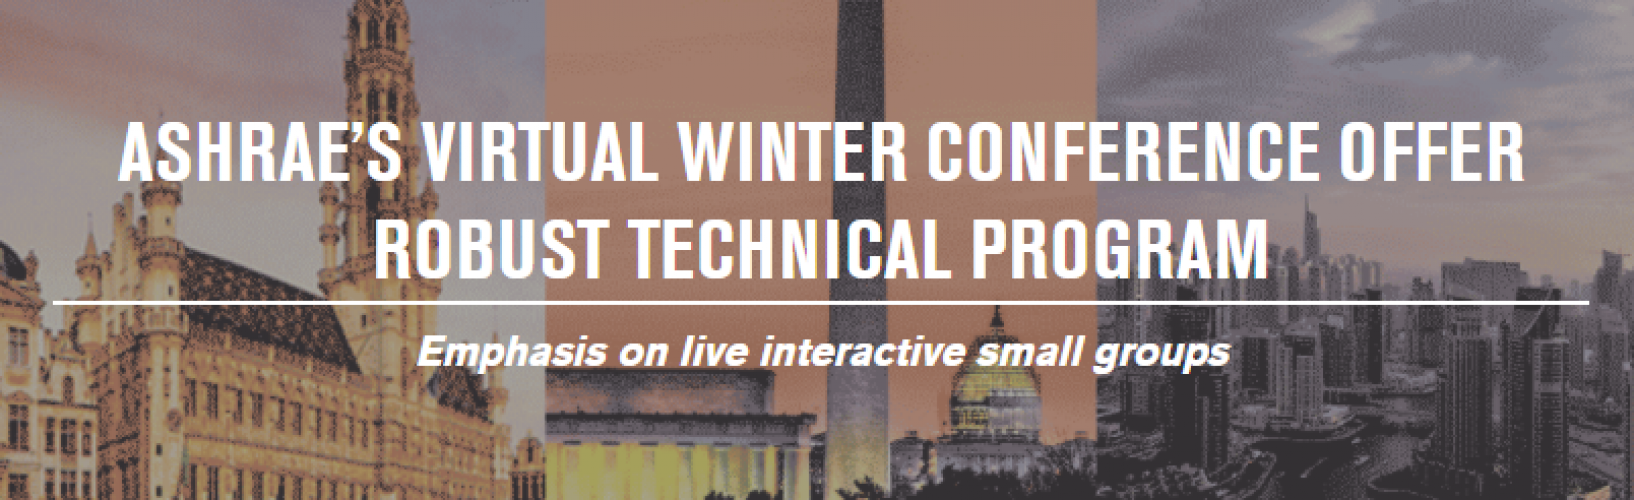 ashrae’s-virtual-winter-conference-offer-robust-technical-program